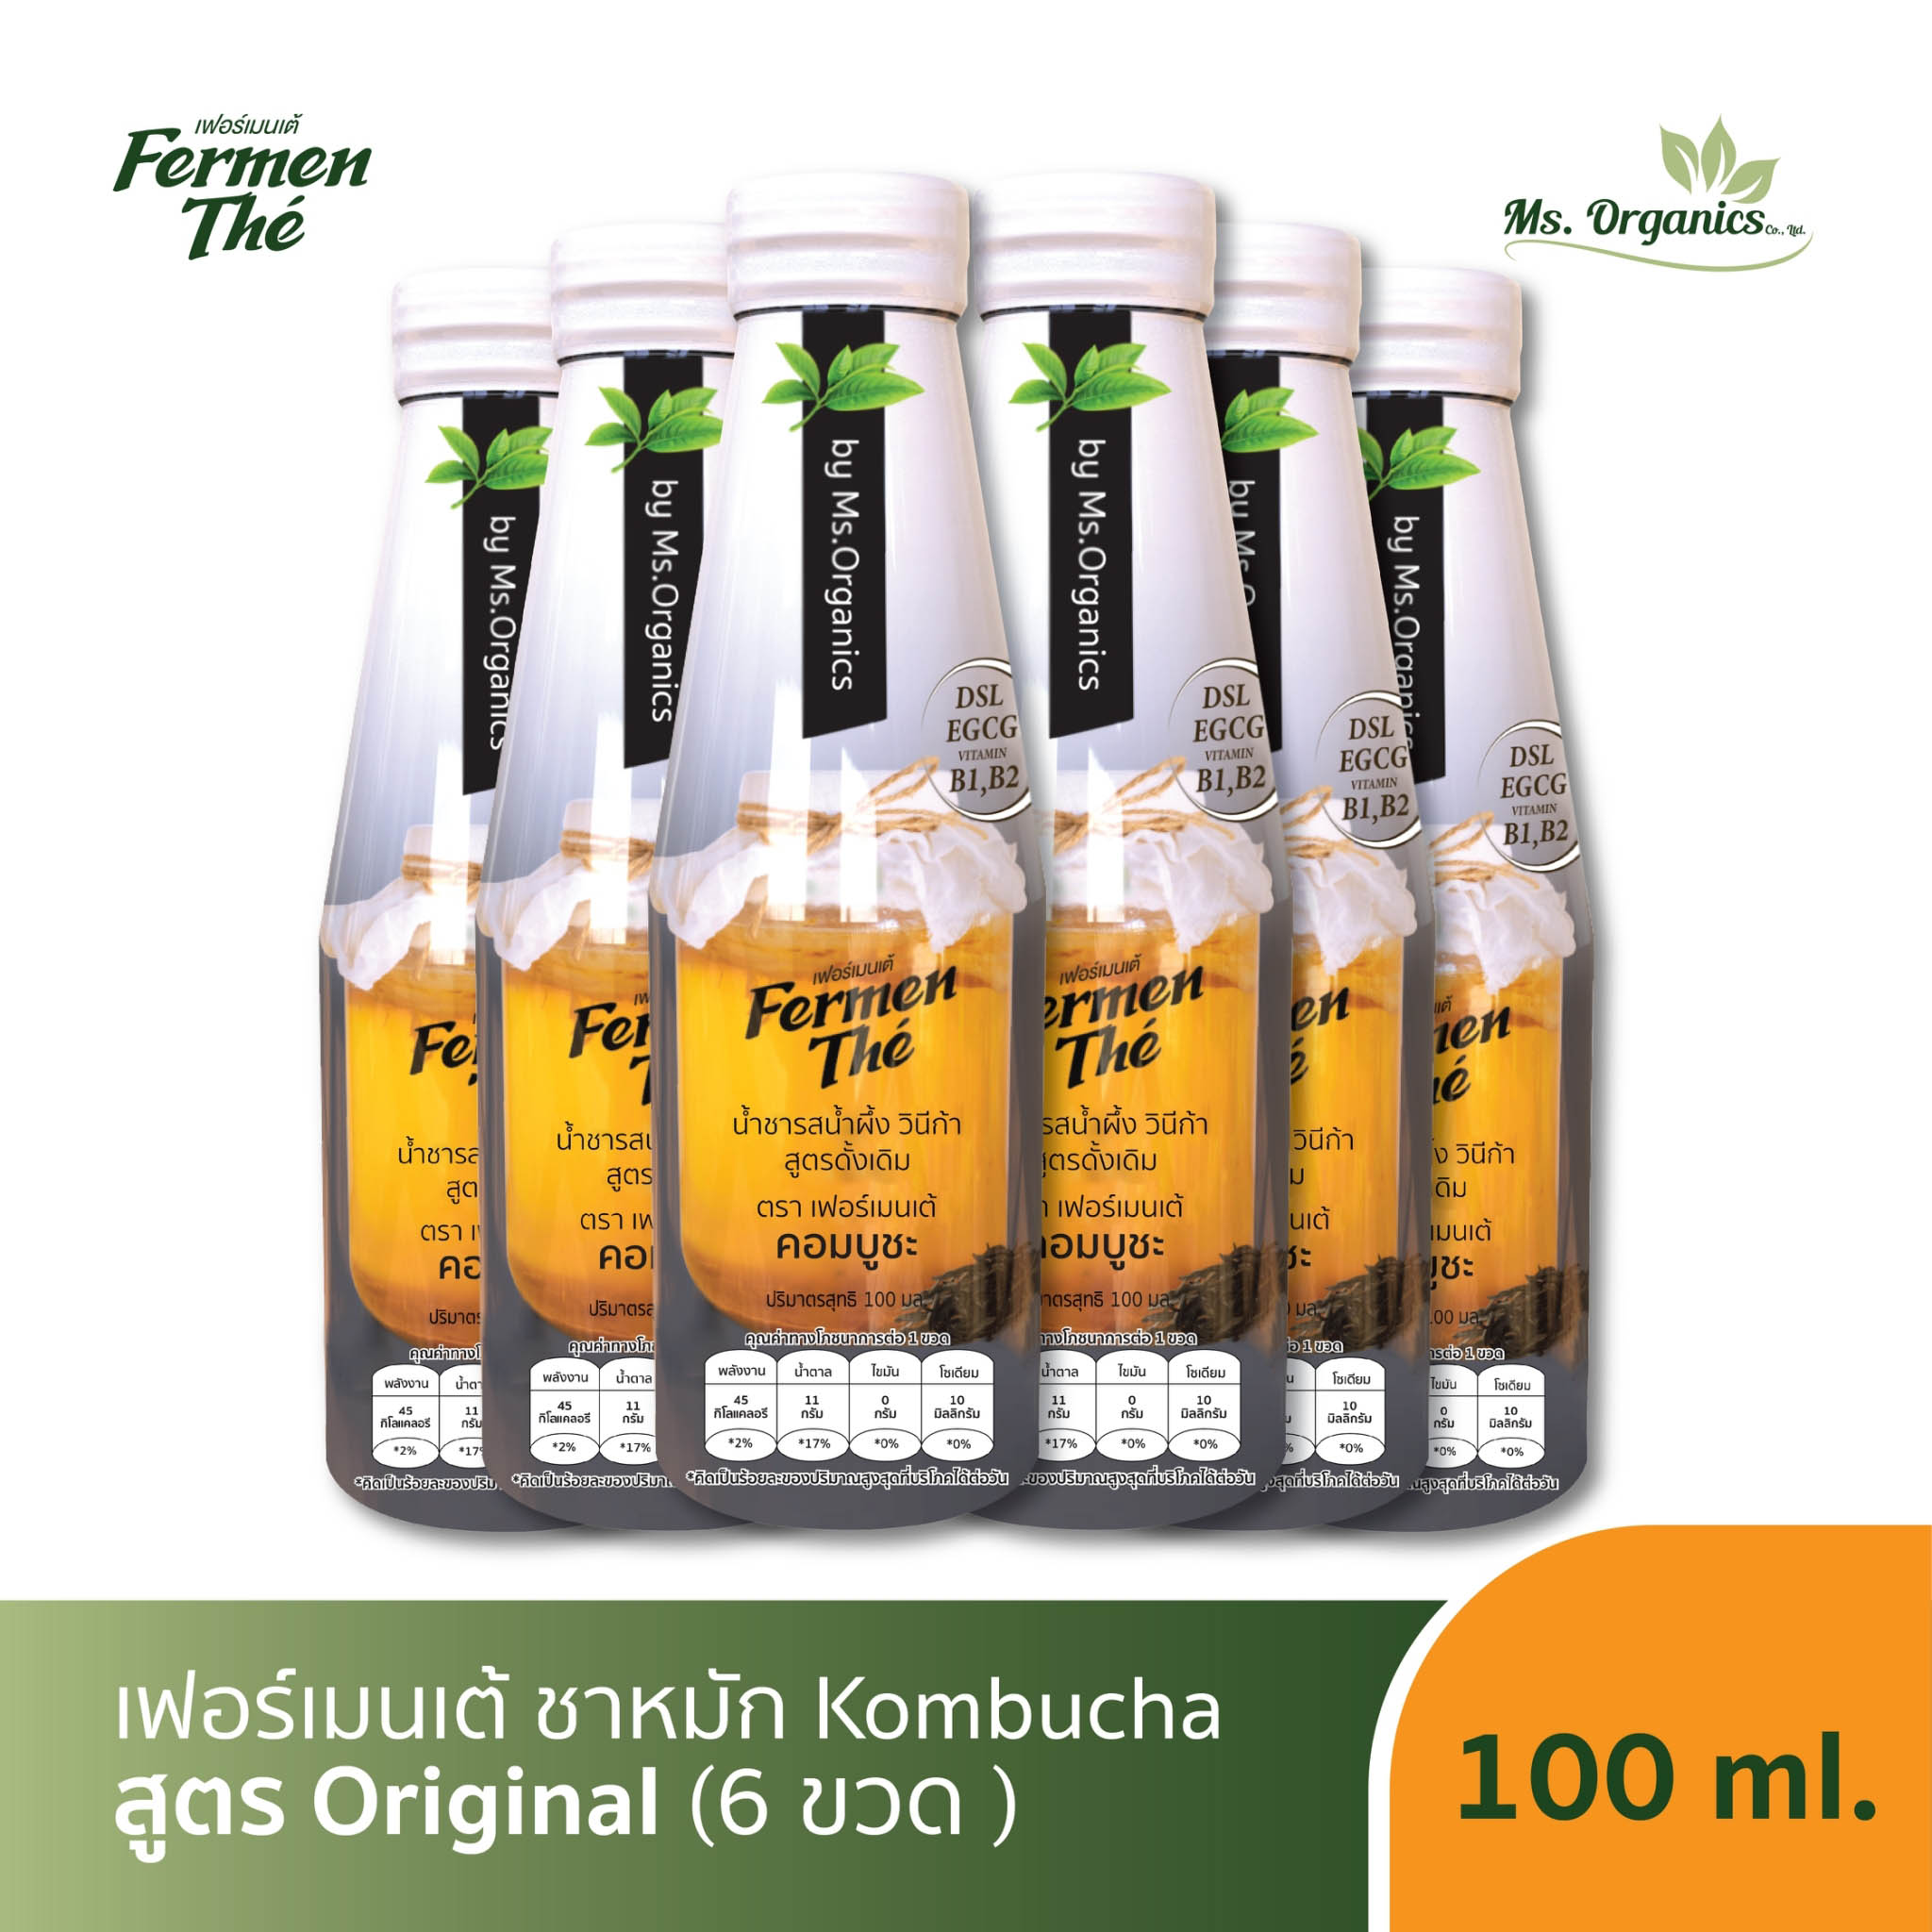 Fermenthé Kombucha Tea Original taste